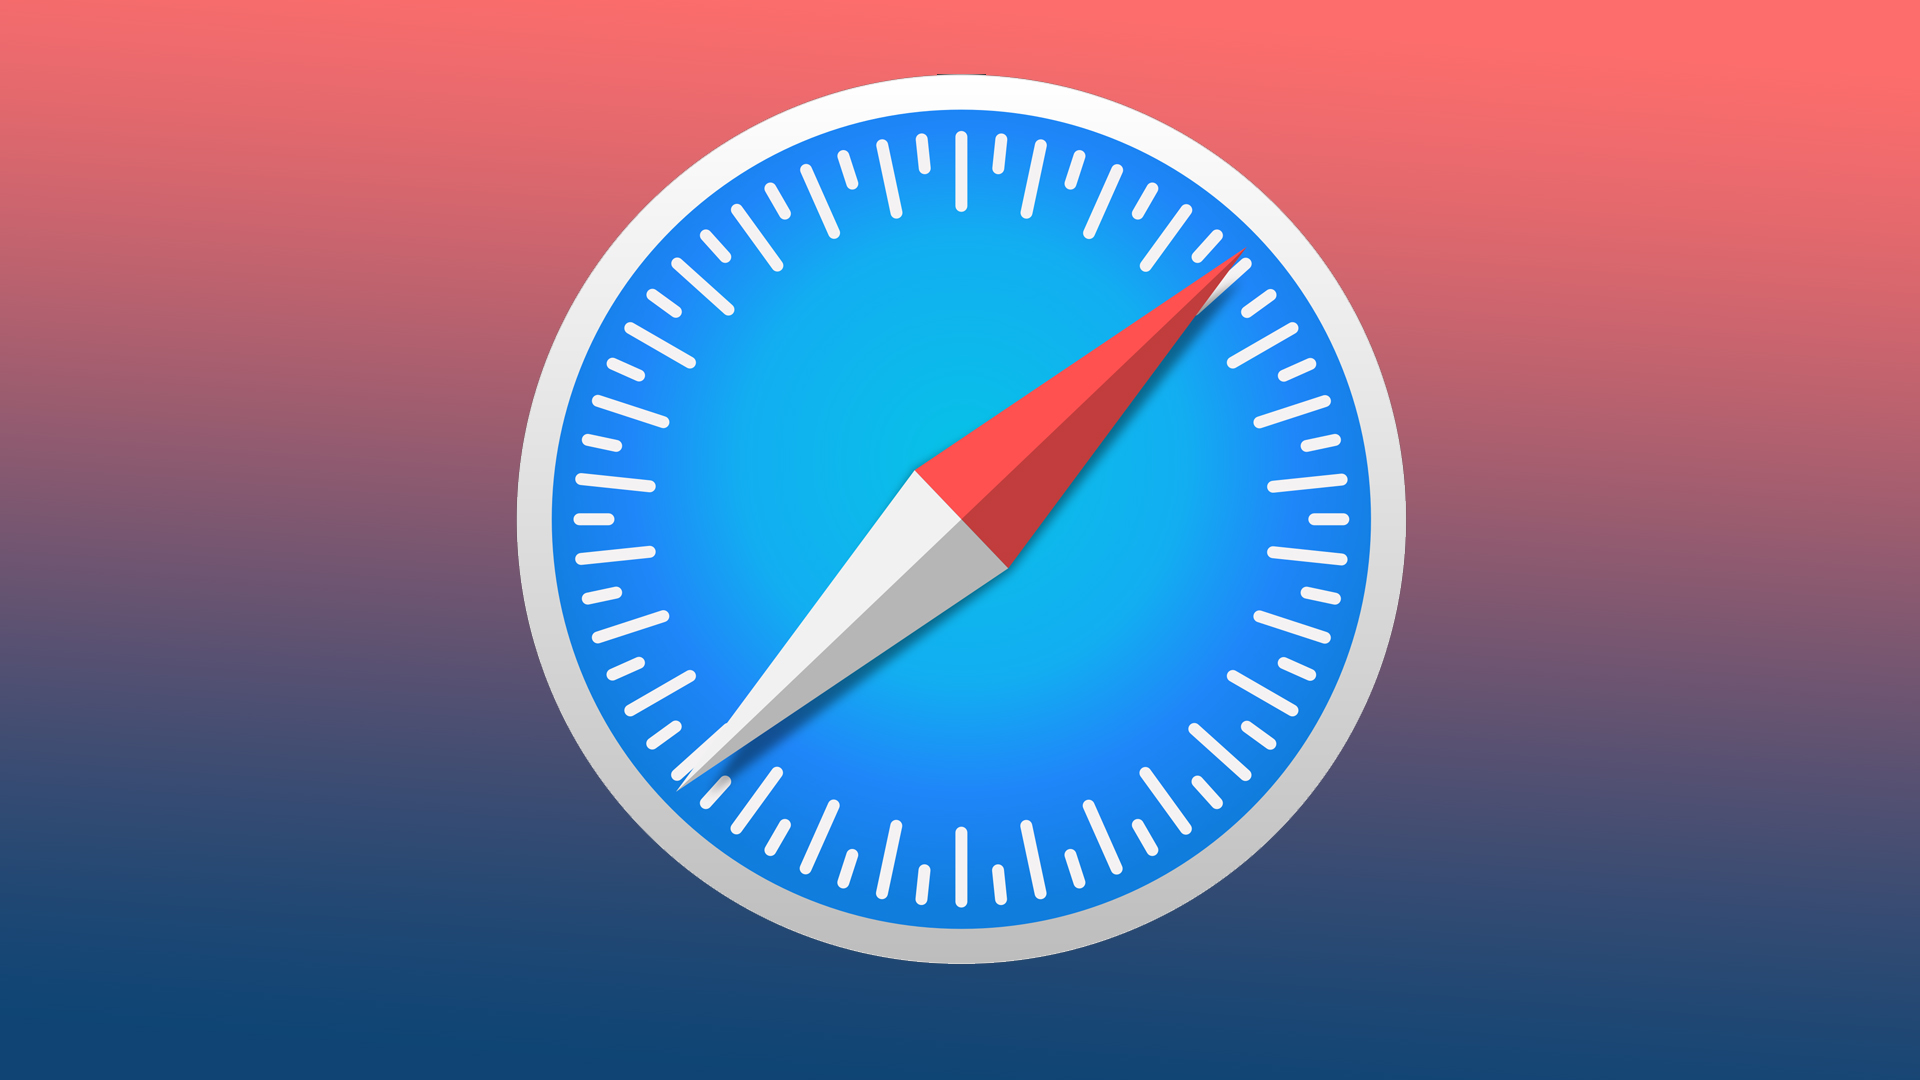 The Apple Safari logo on a gradient background.